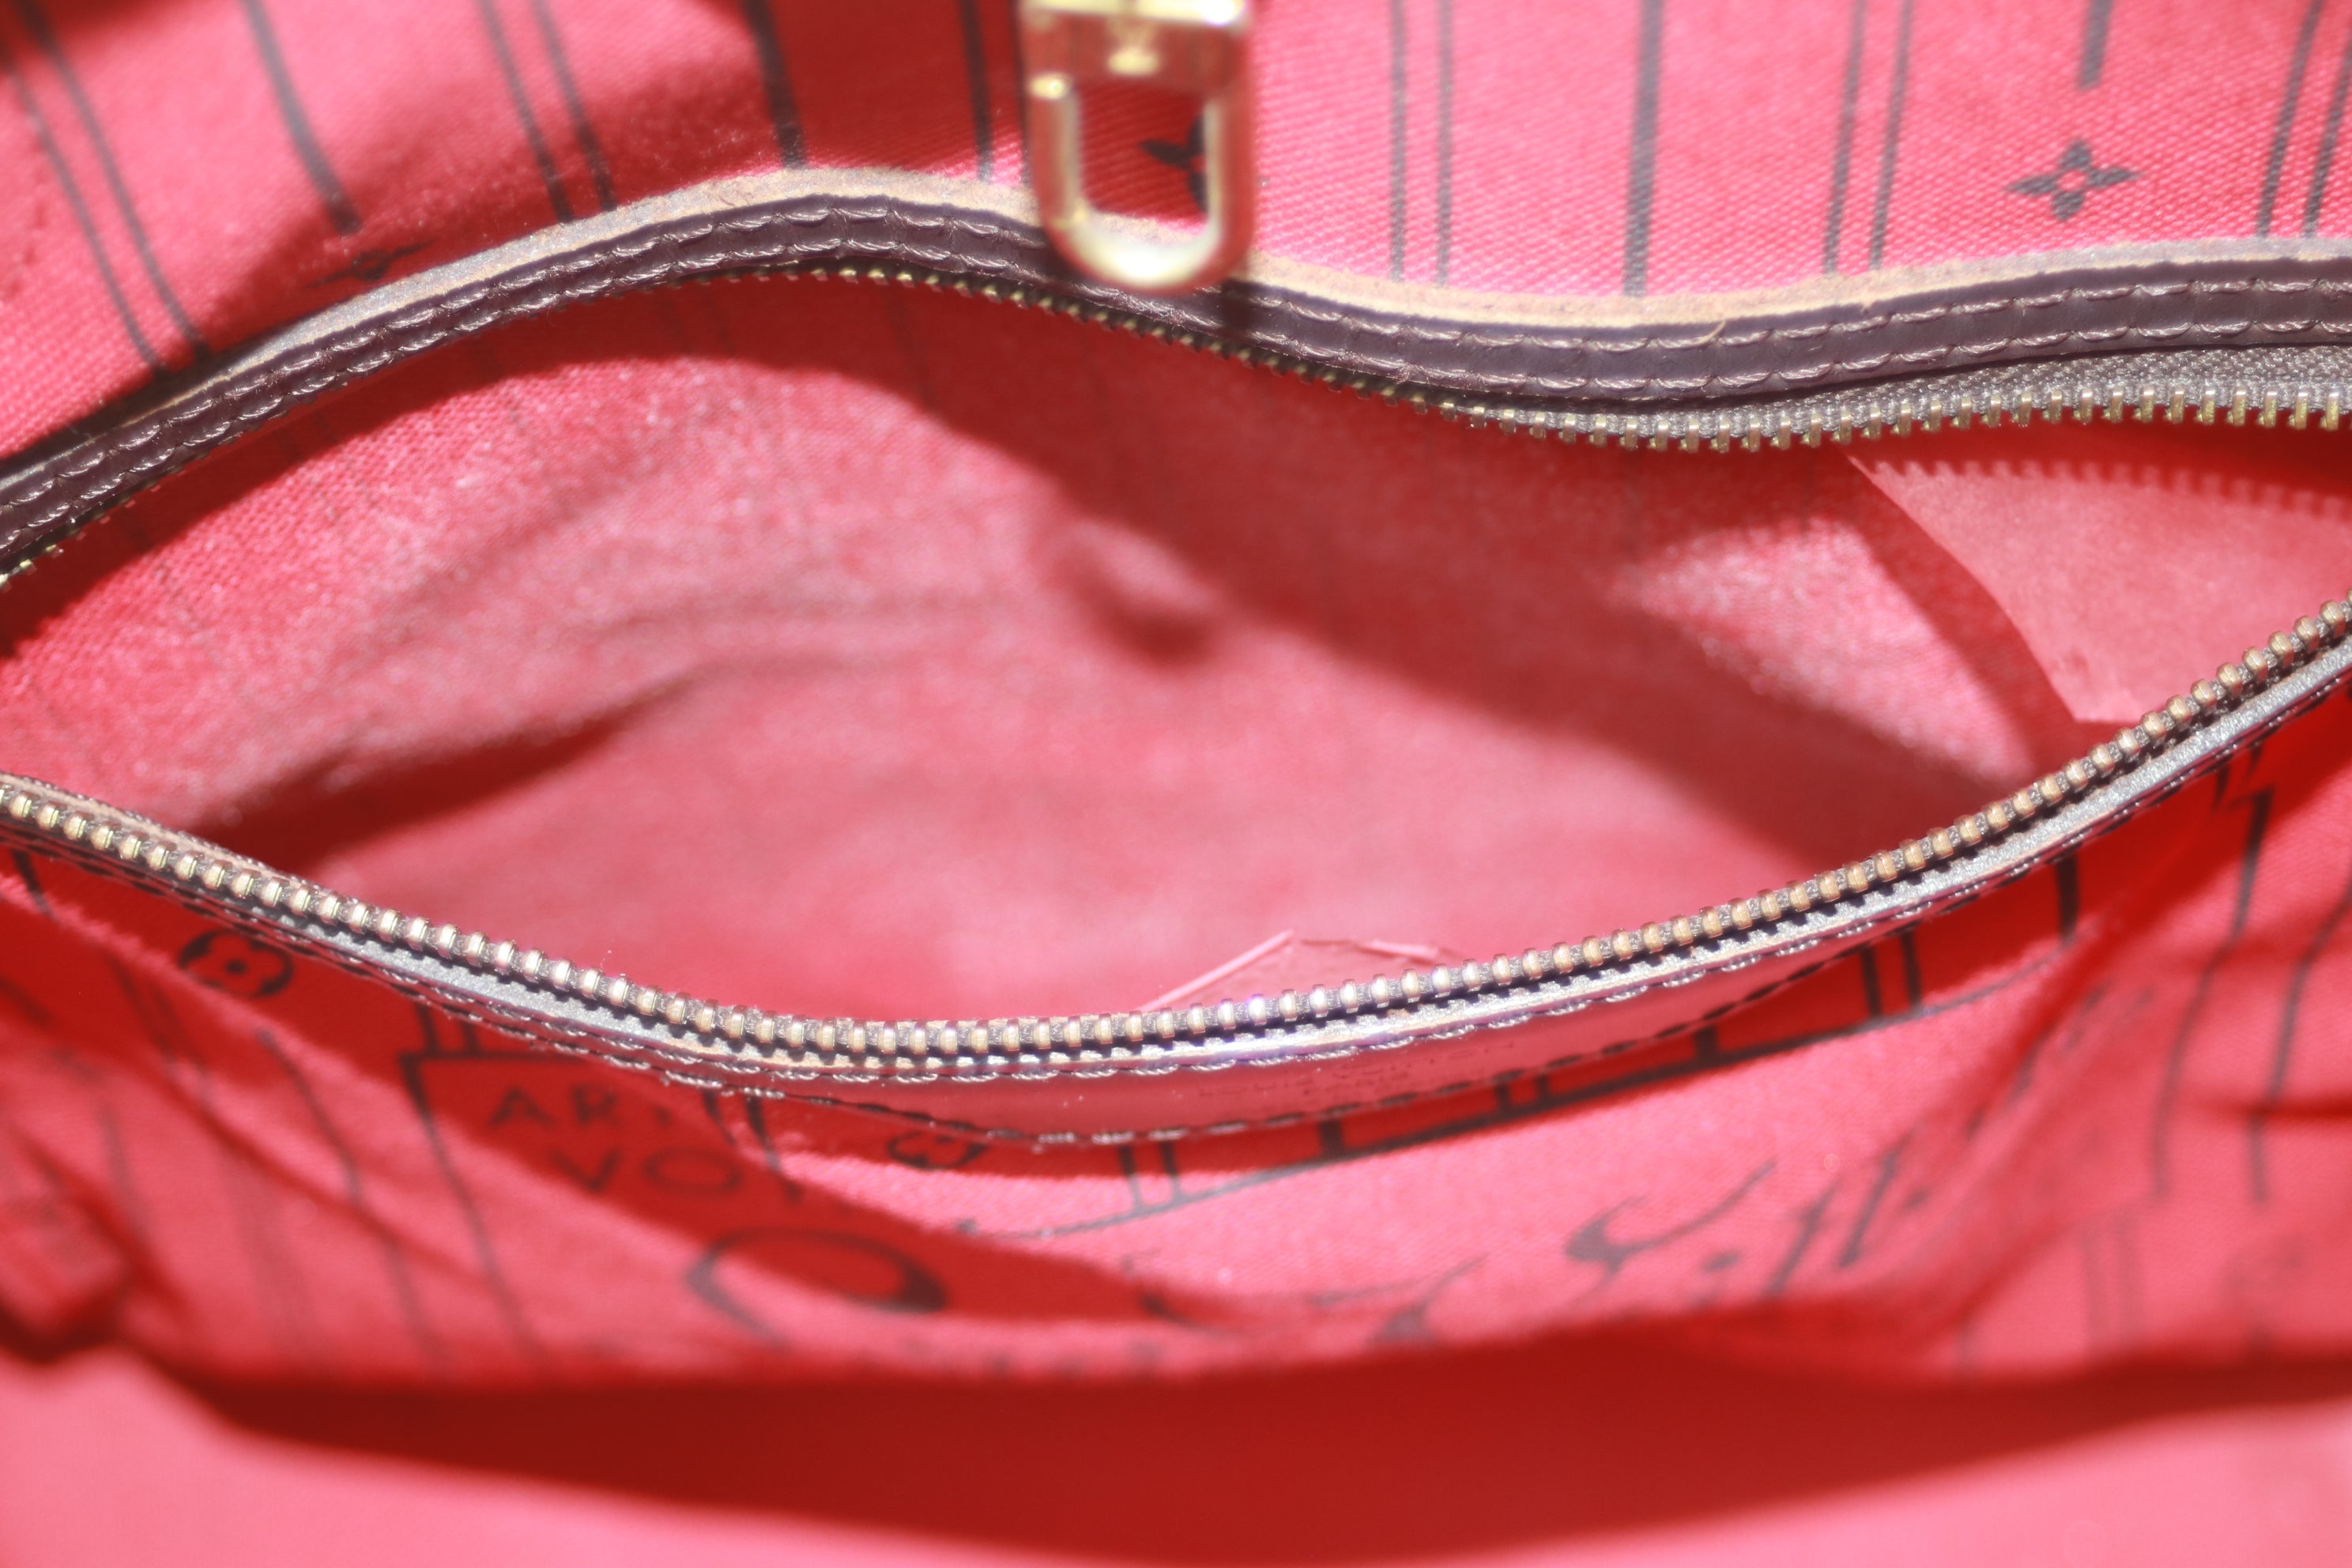 Louis Vuitton Neverfull MM Damier Ebene Shoulder Tote Bag Used (6815)